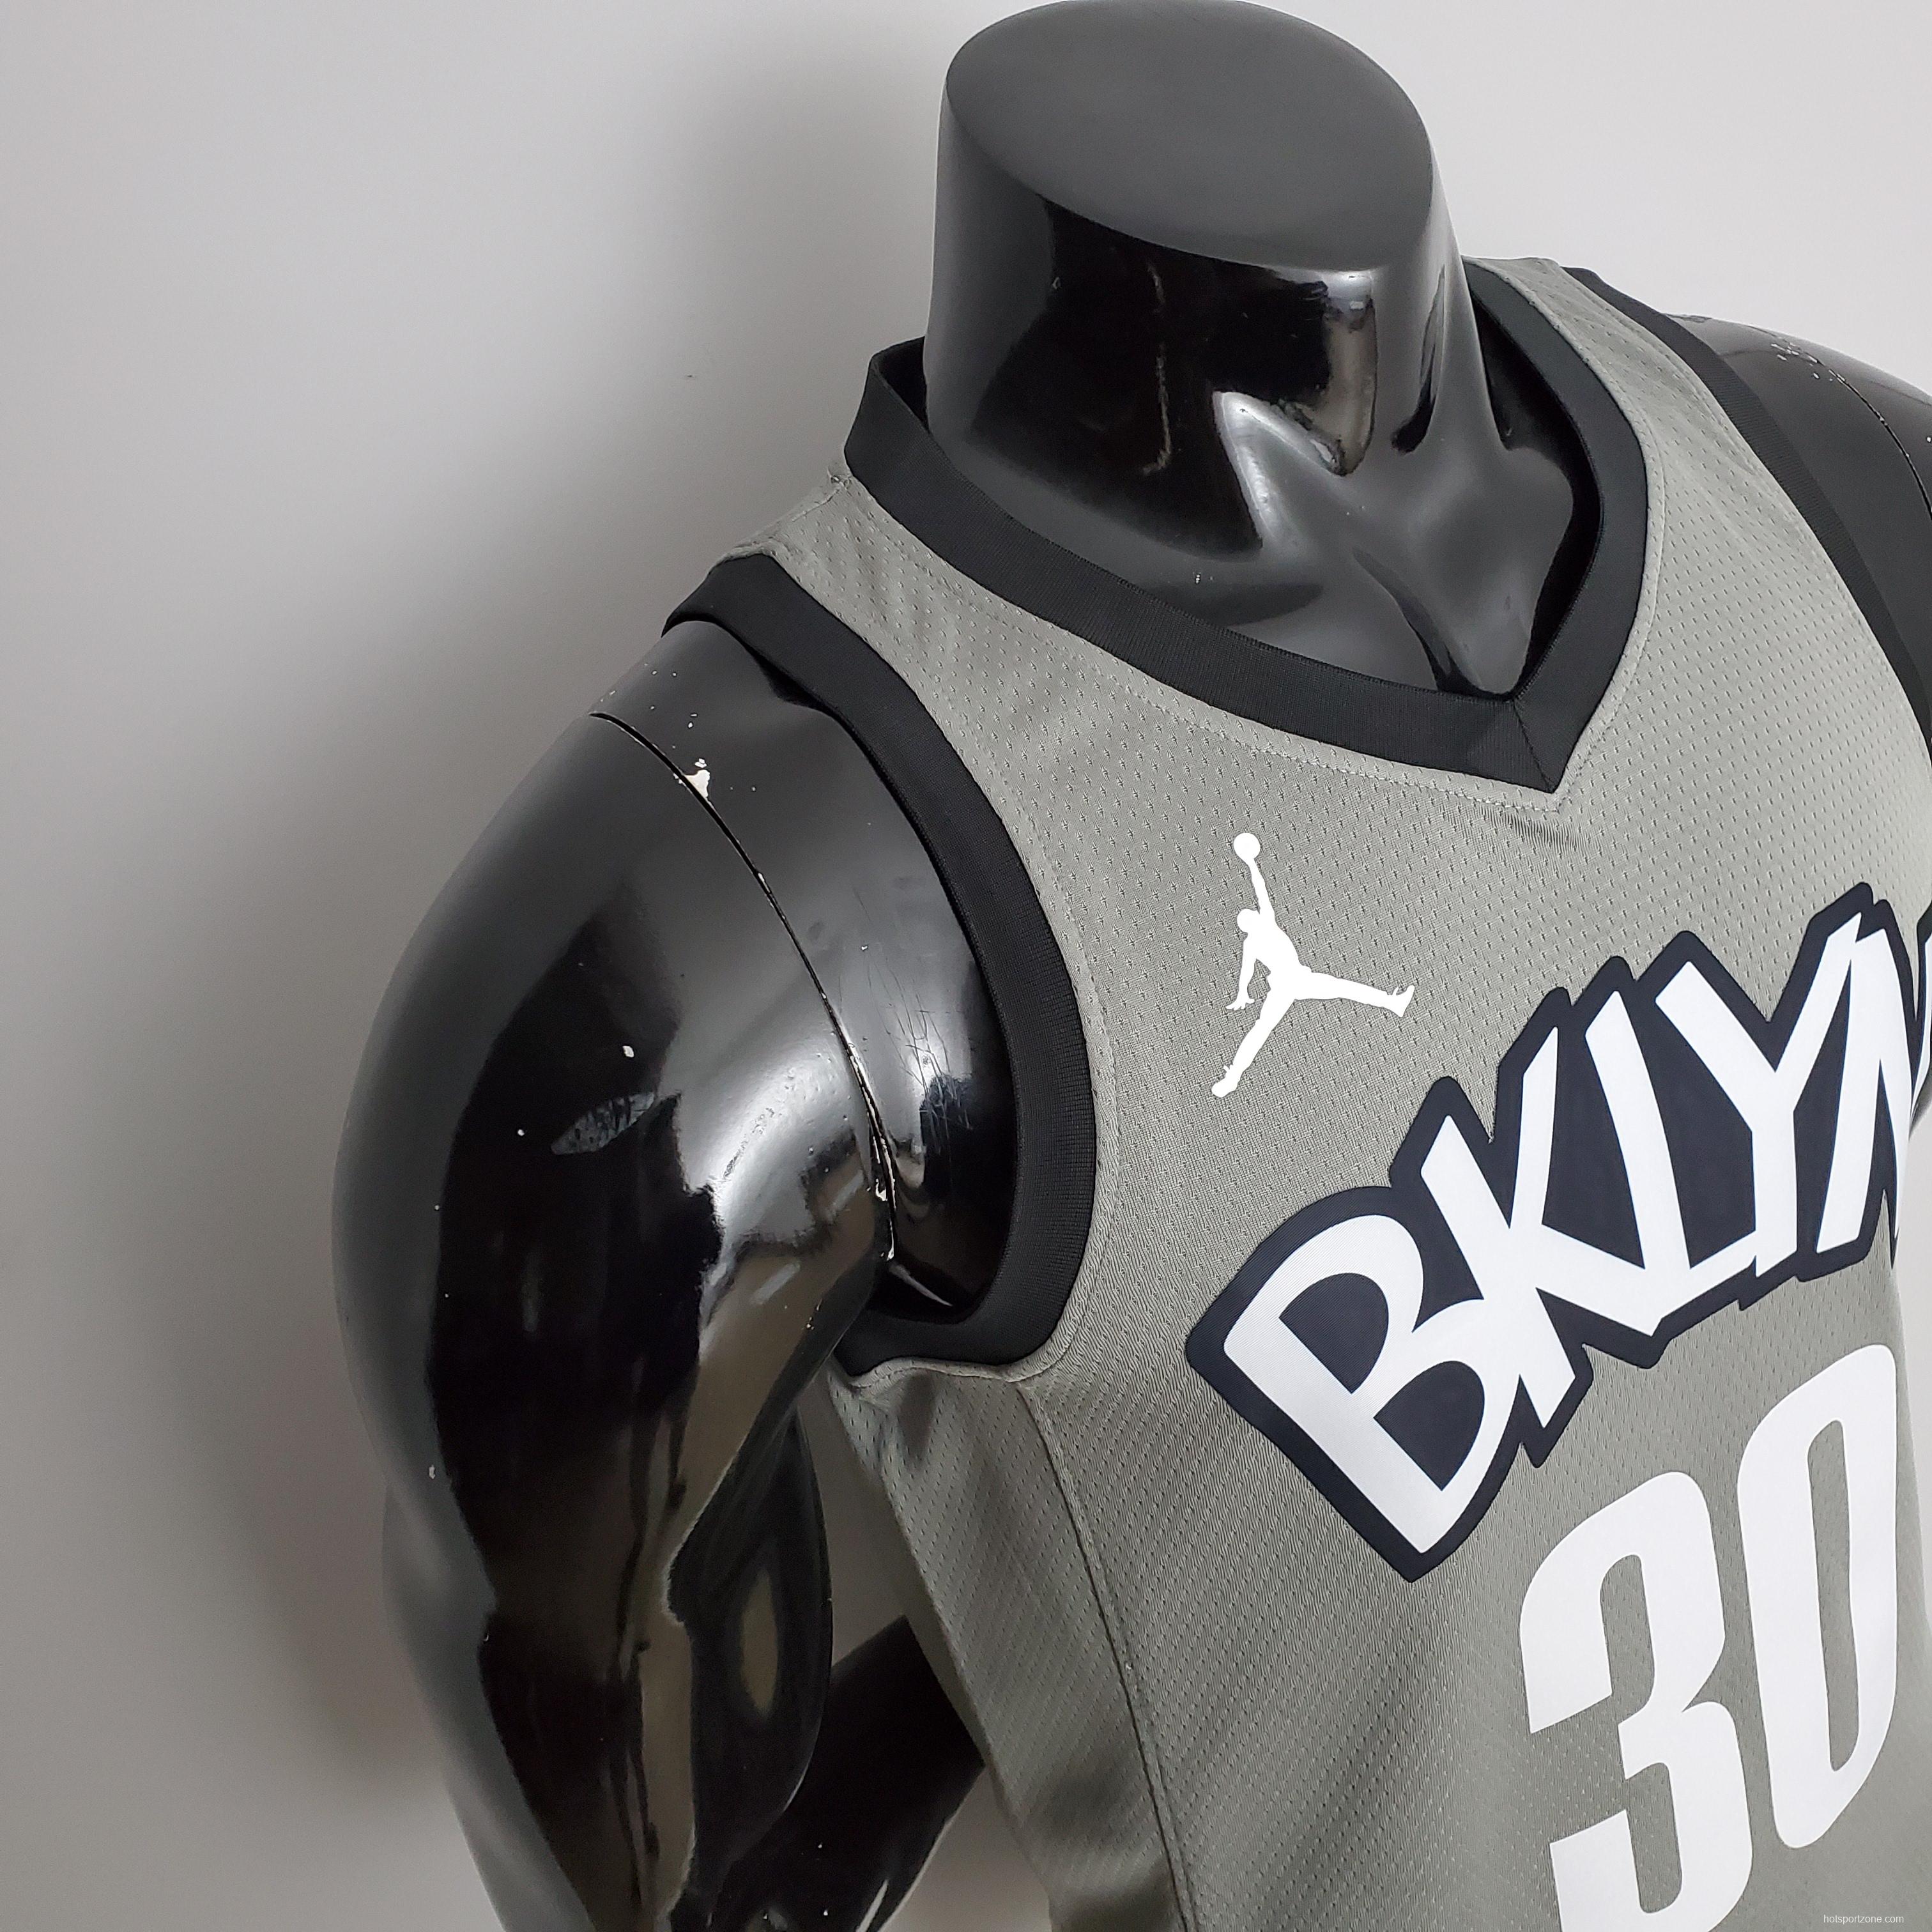 NBA Nets Curry #30 Flyer Grey Jersey